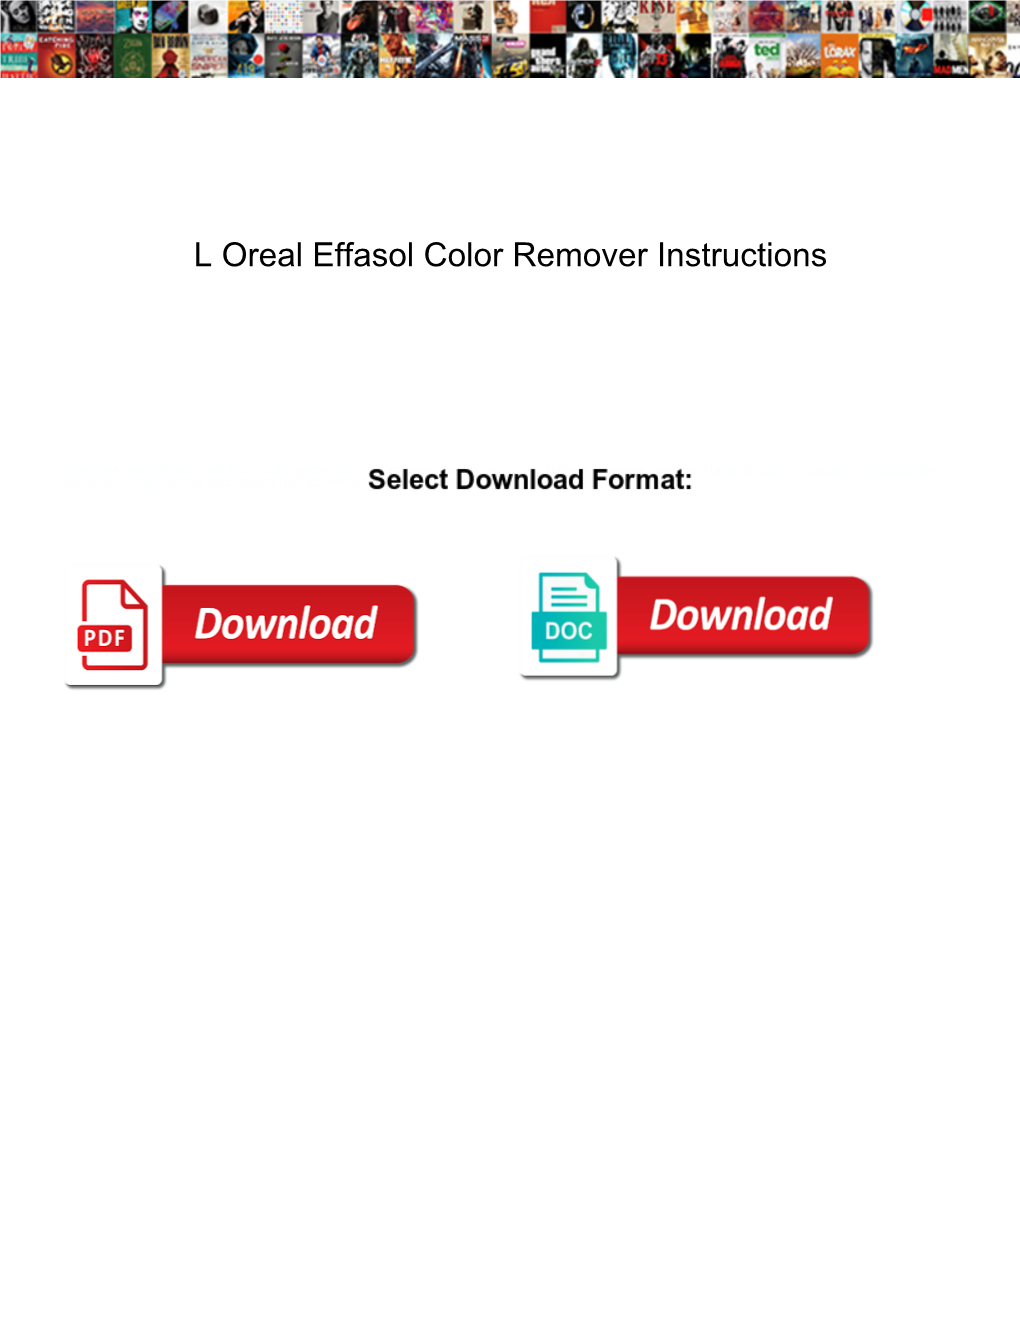 L Oreal Effasol Color Remover Instructions